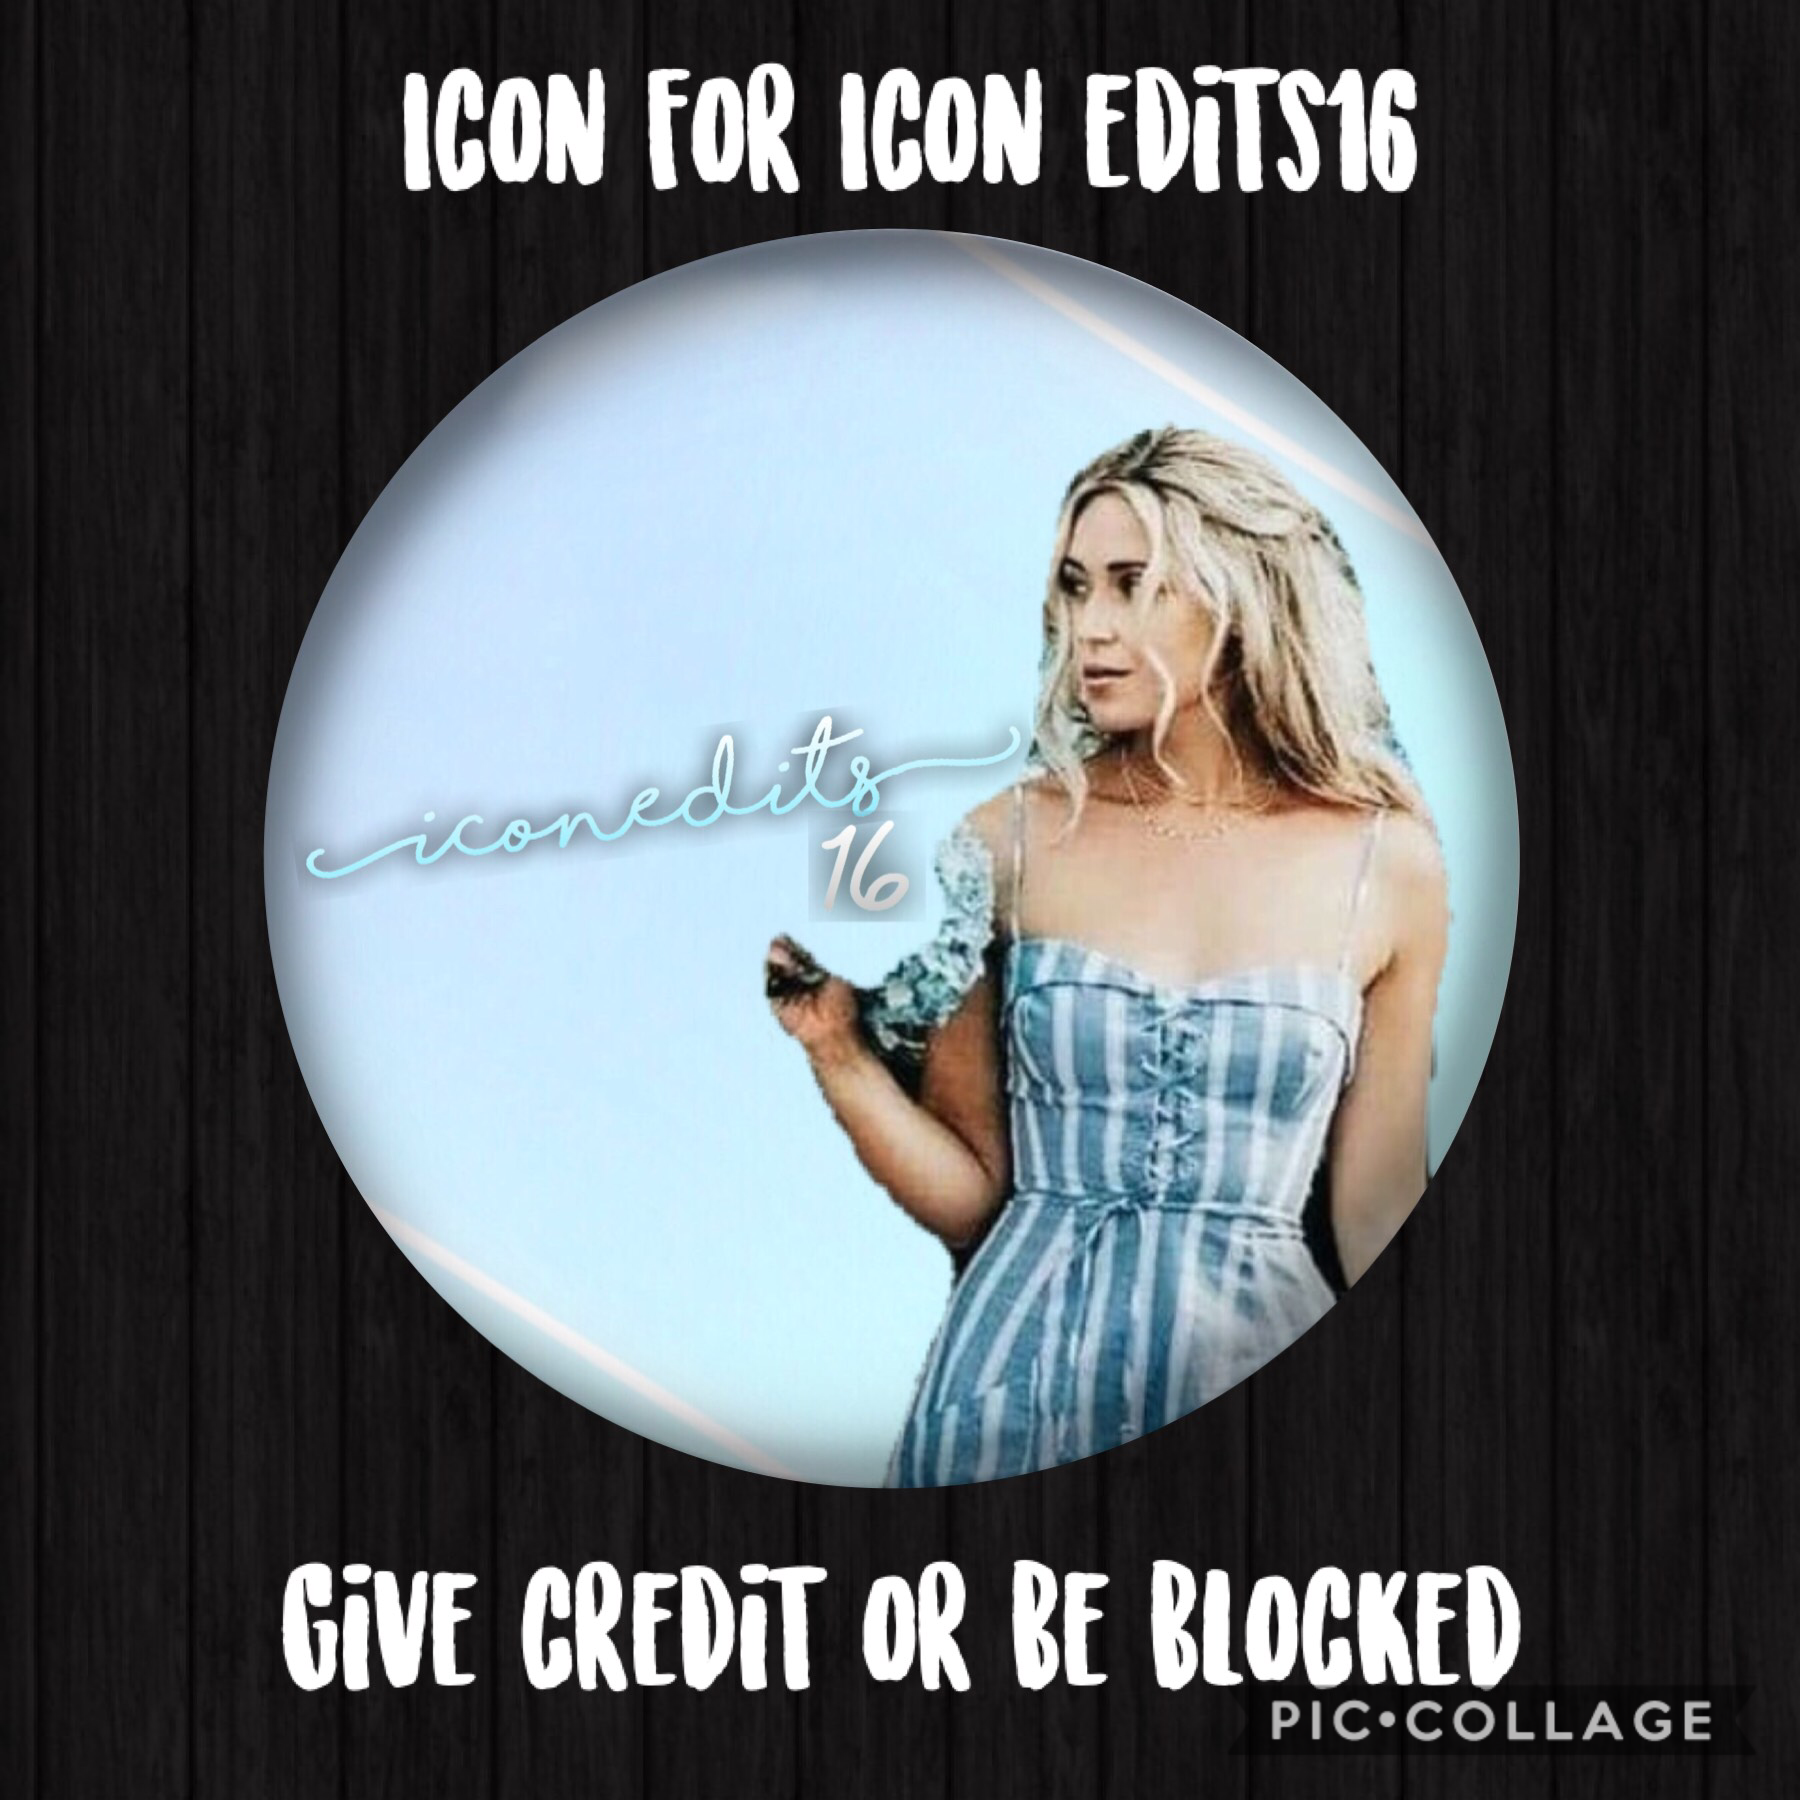 Icon for icon edits16